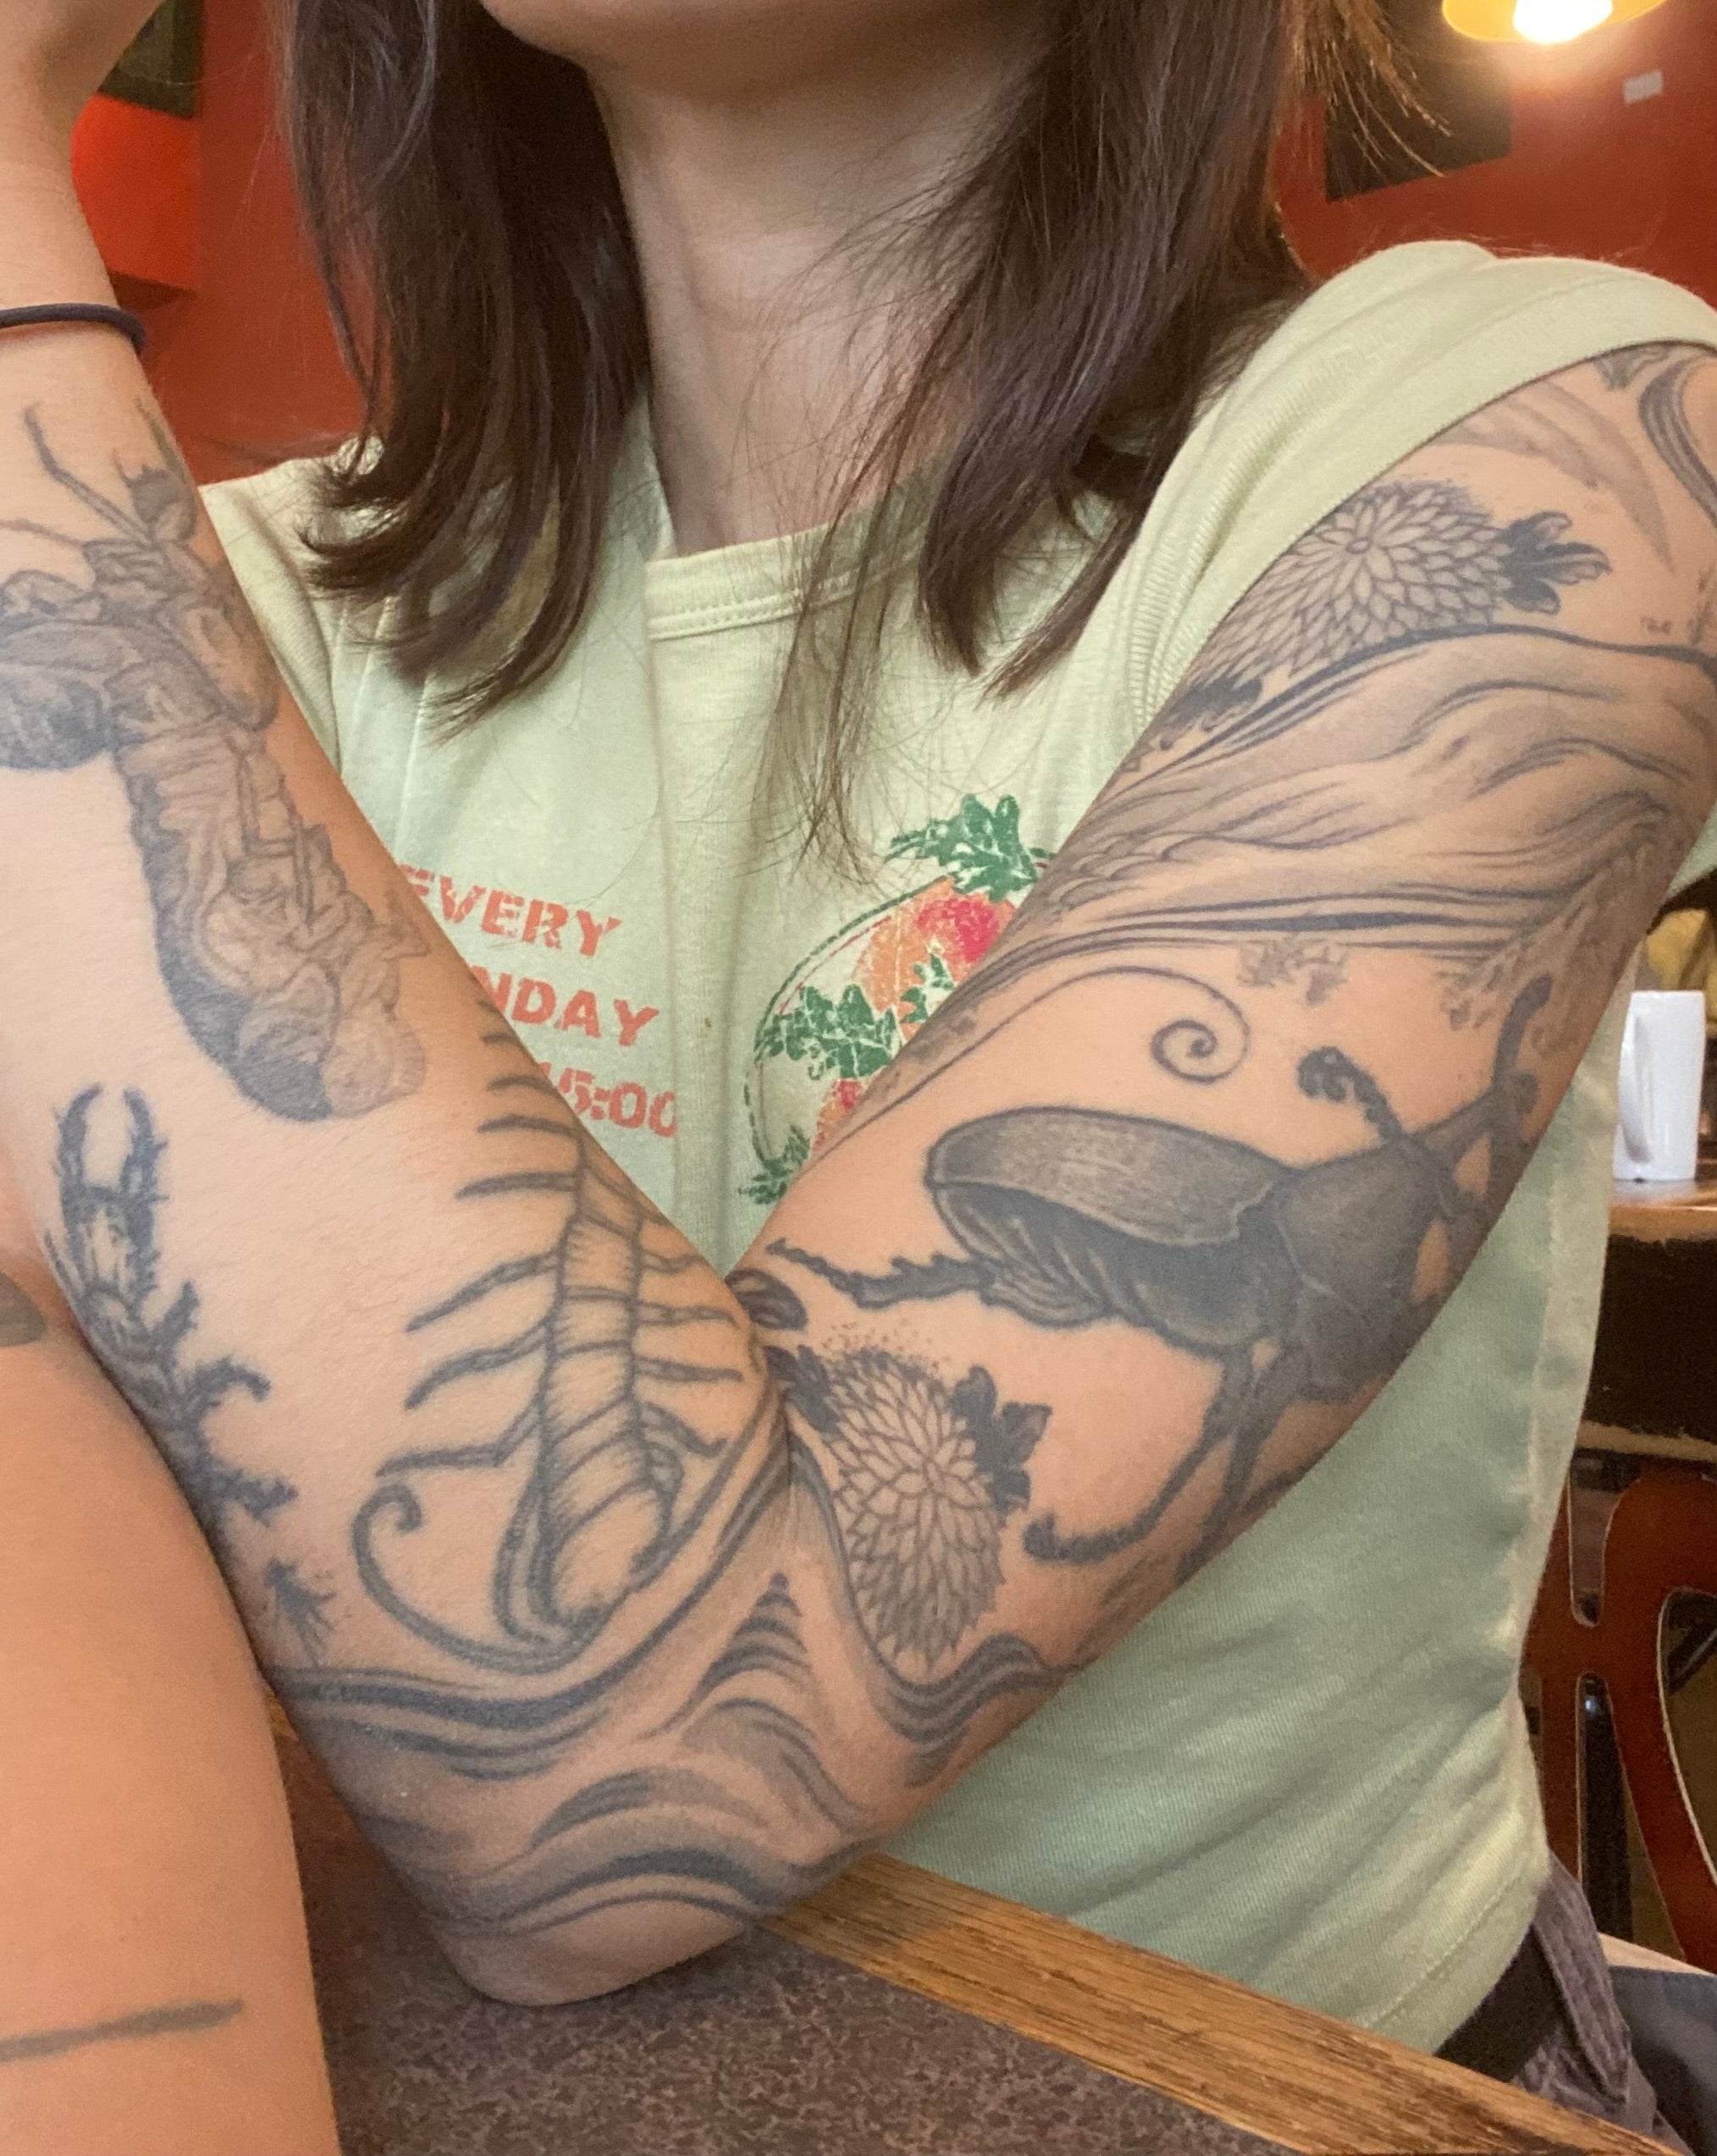 Mia Lippey's tattoo sleeve 